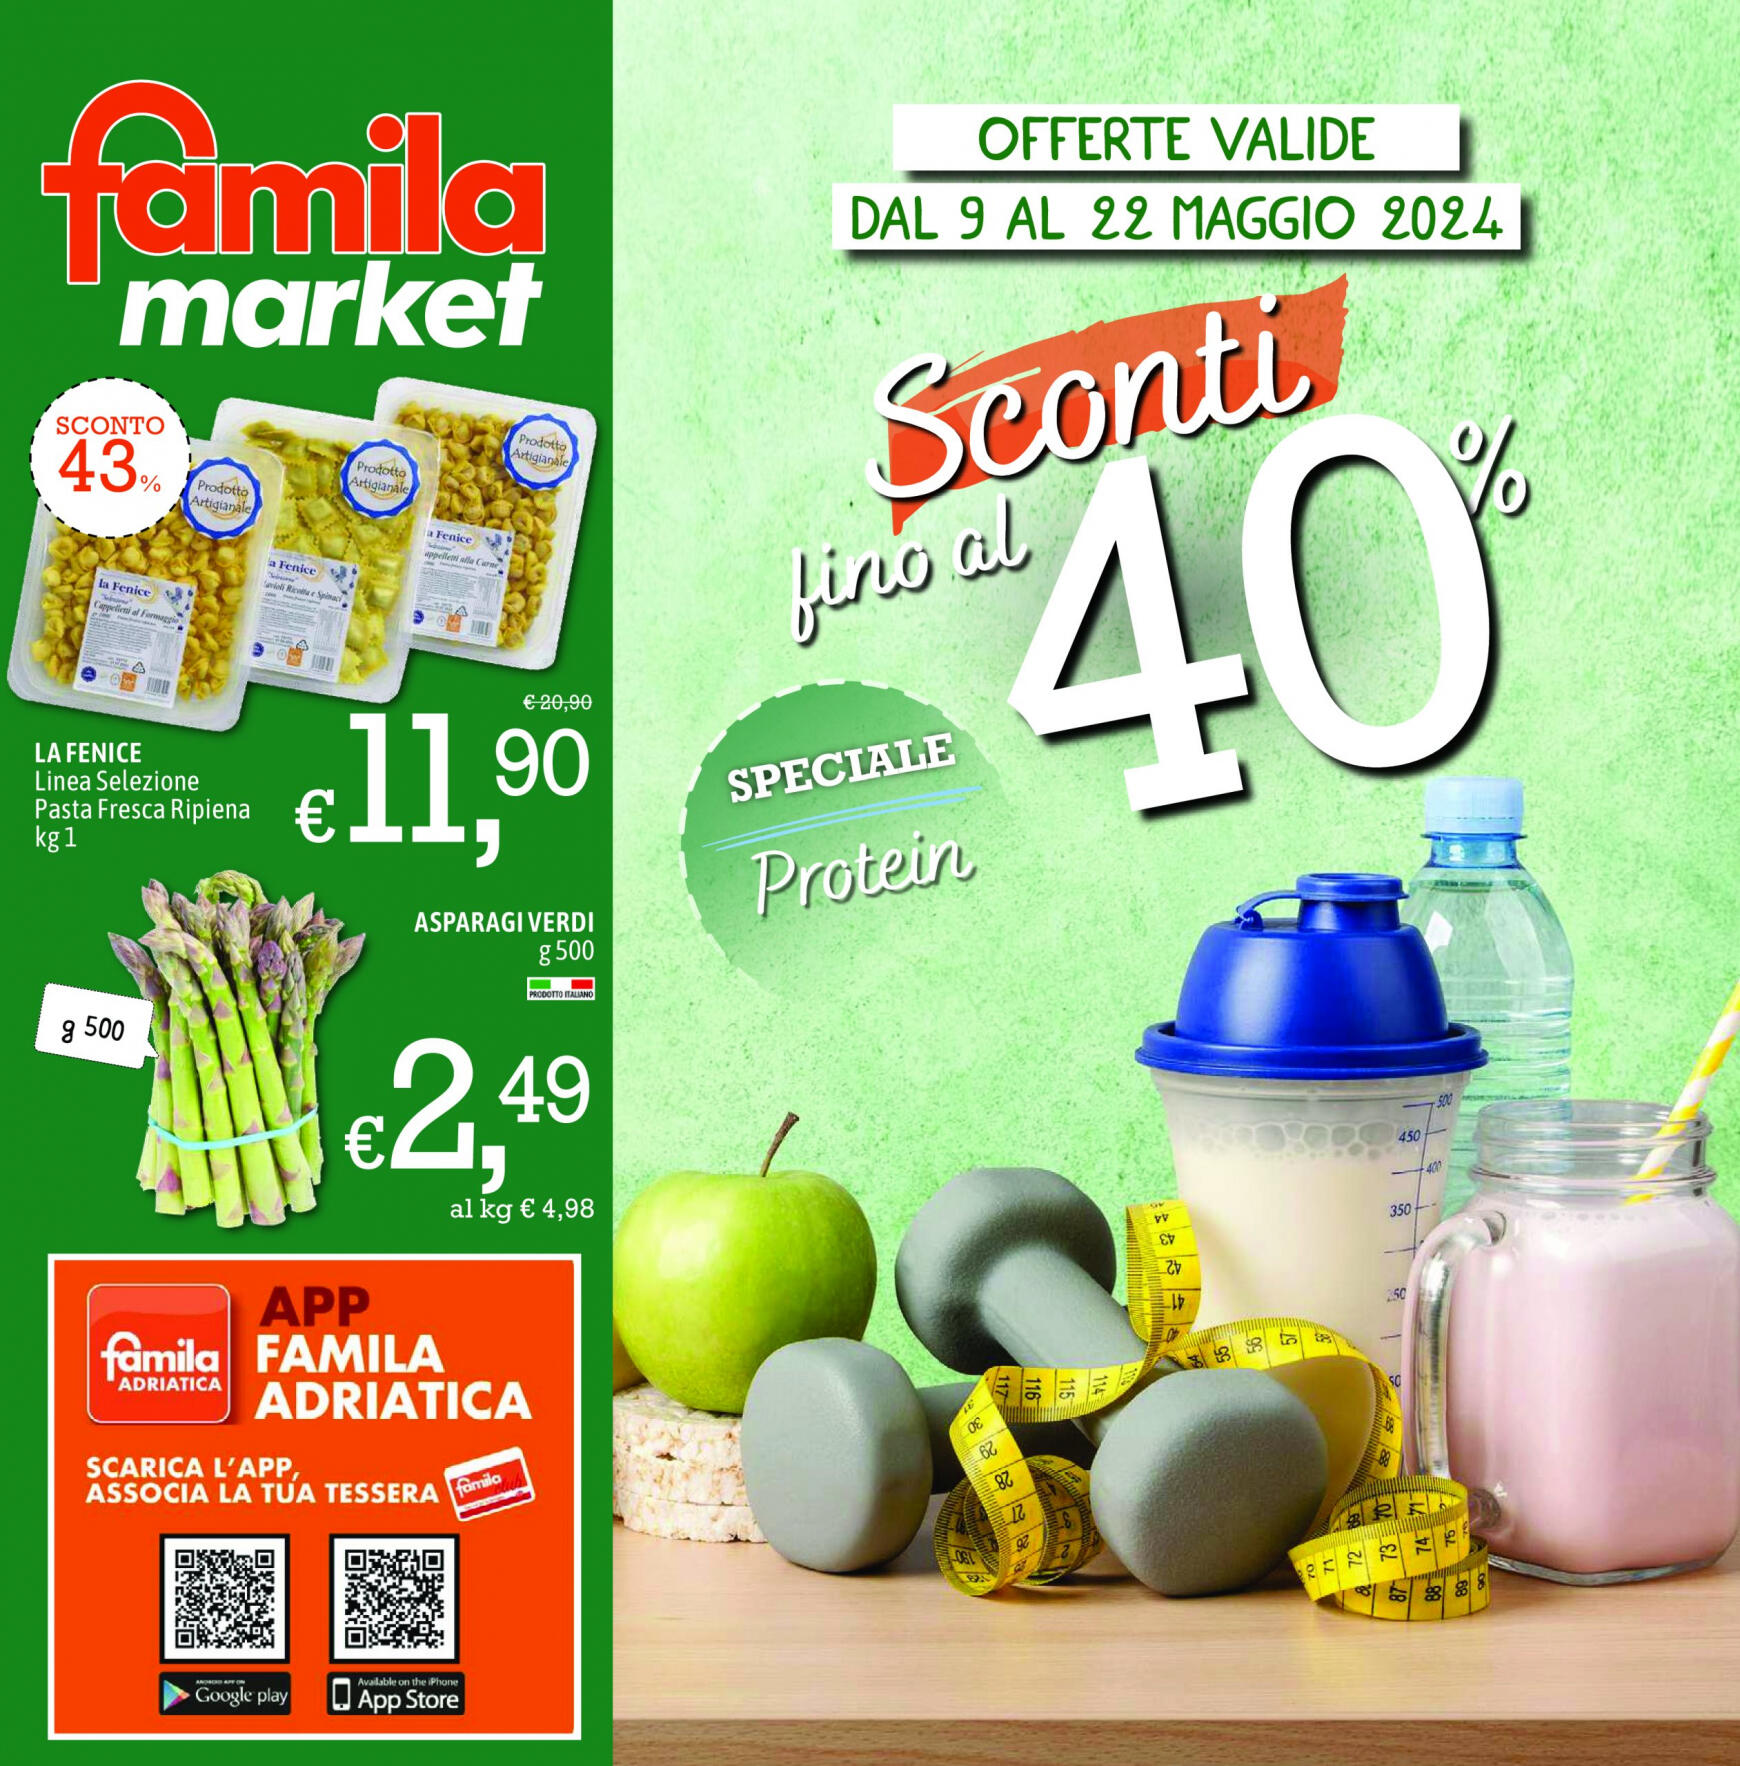 famila - Nuovo volantino Famila market 09.05. - 22.05. - page: 1